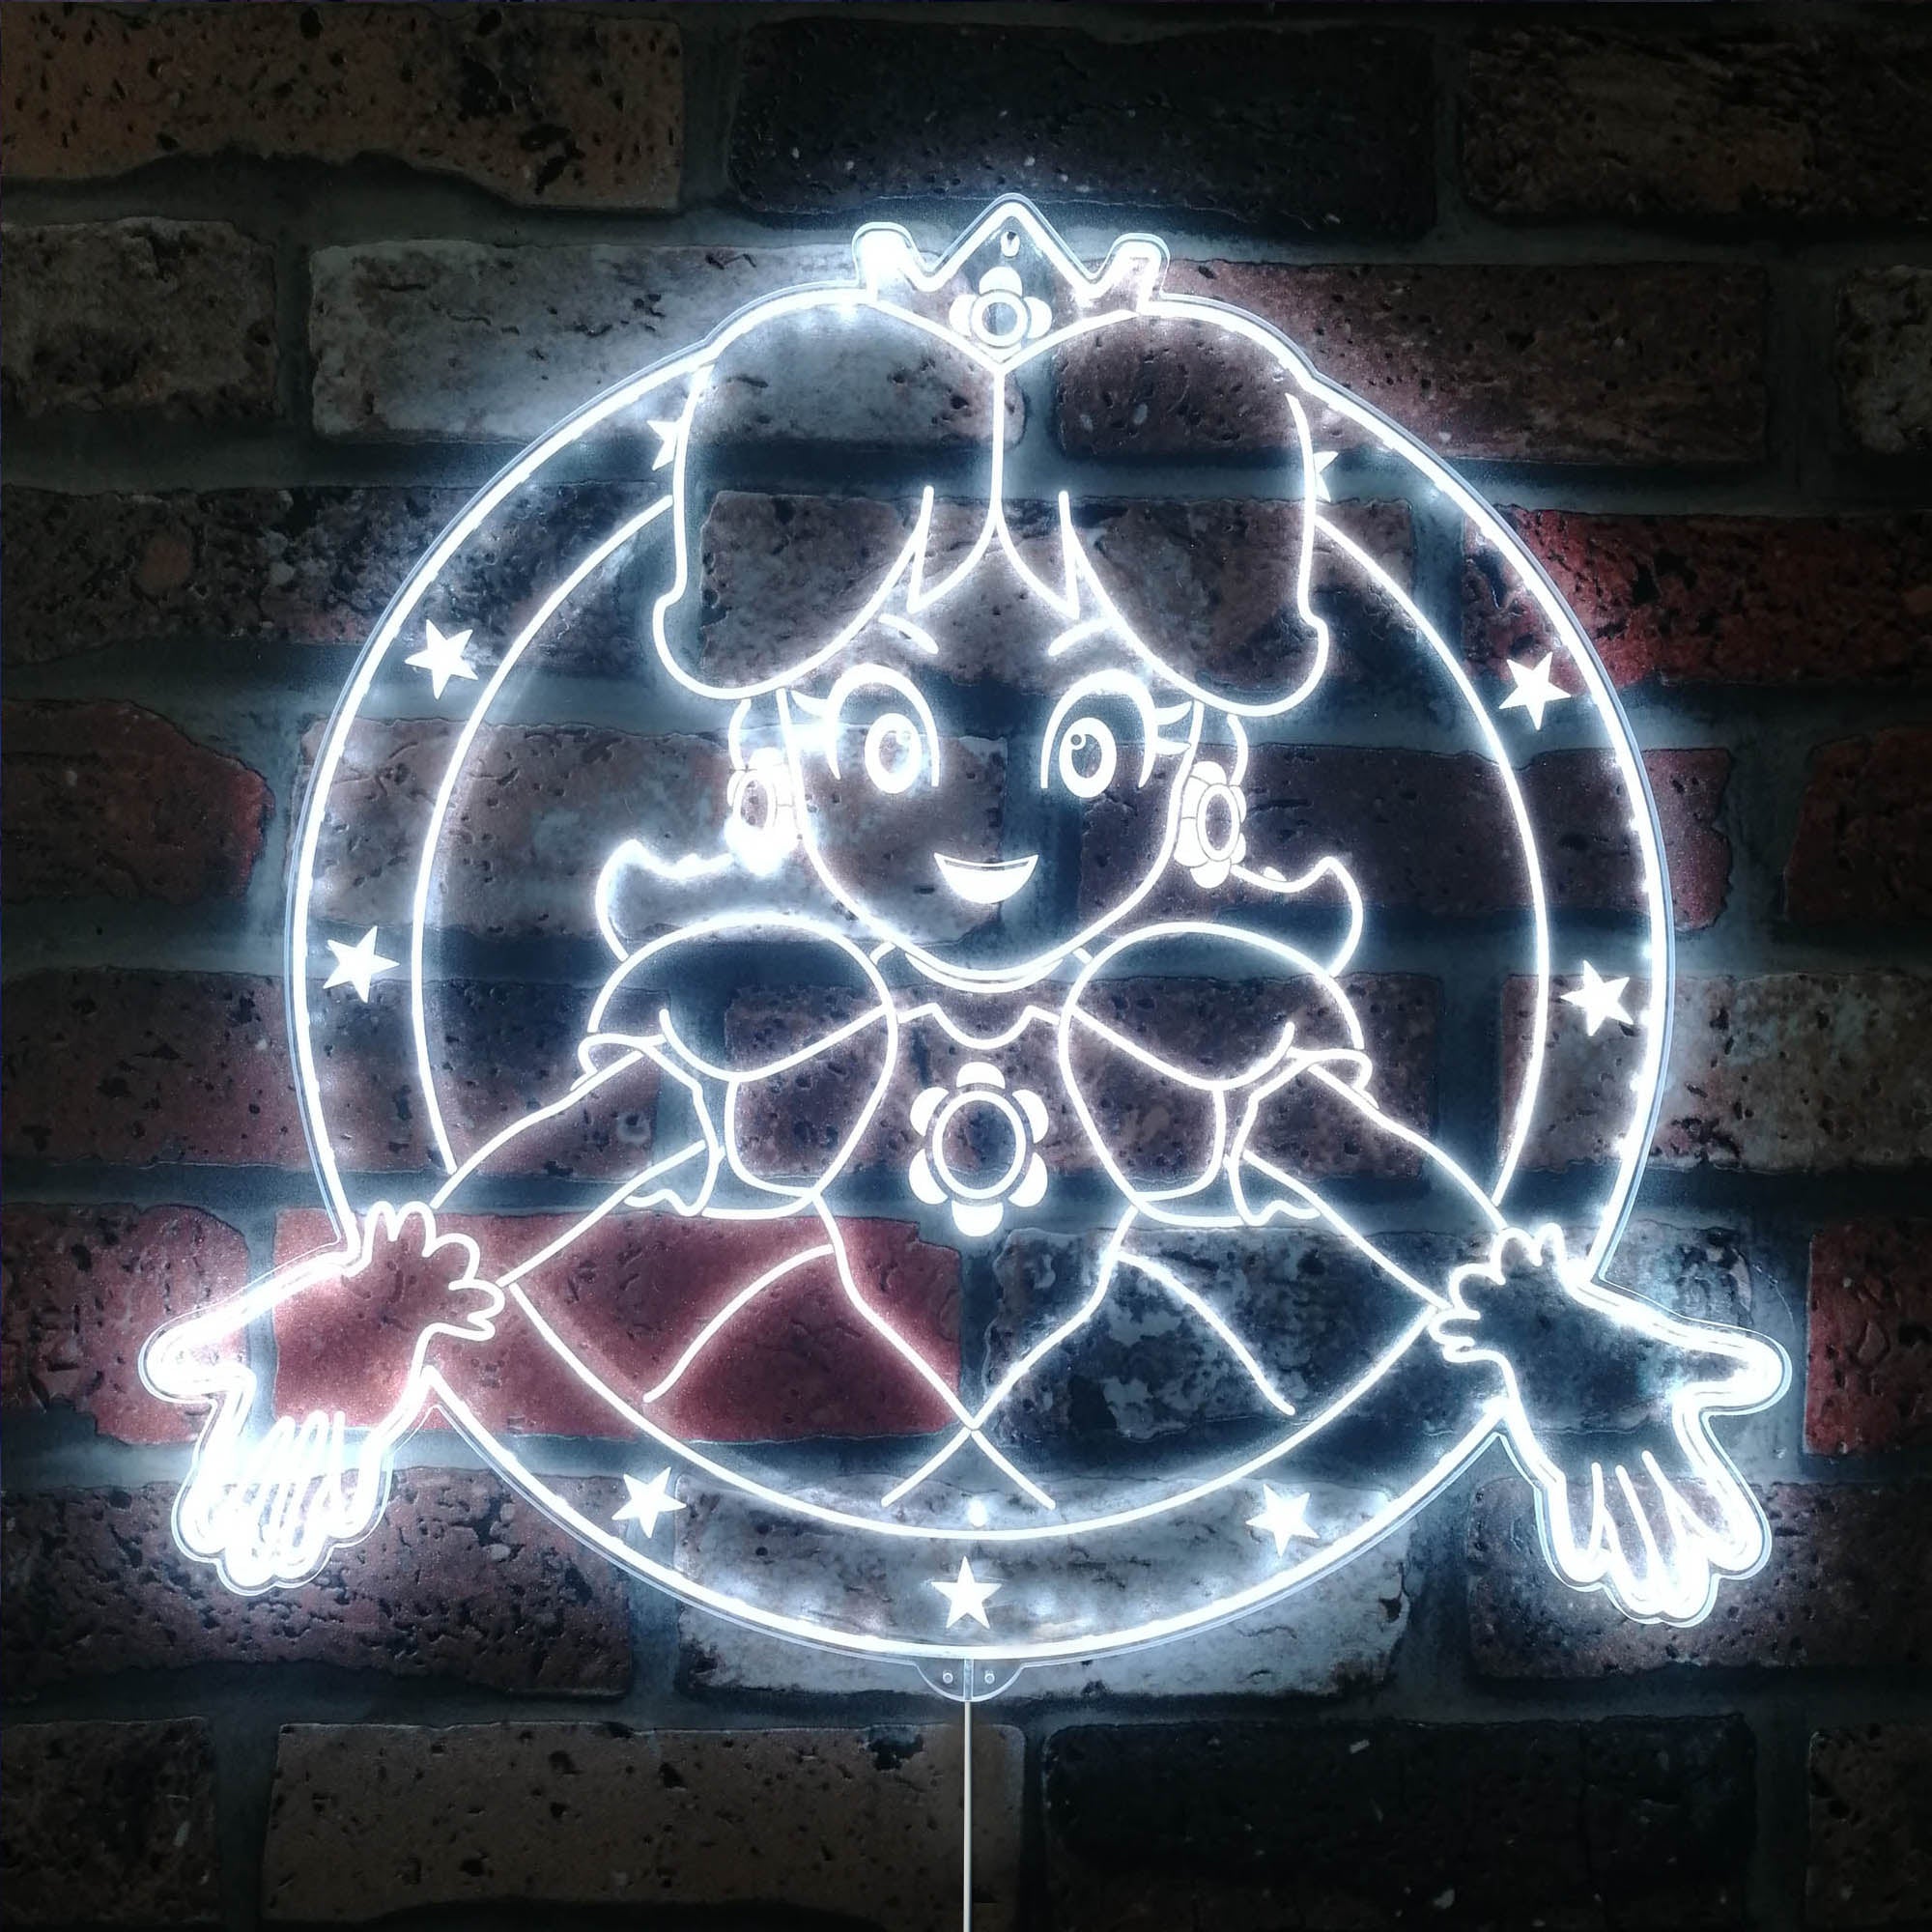 Super Mario Princess Dynamic RGB Edge Lit LED Sign